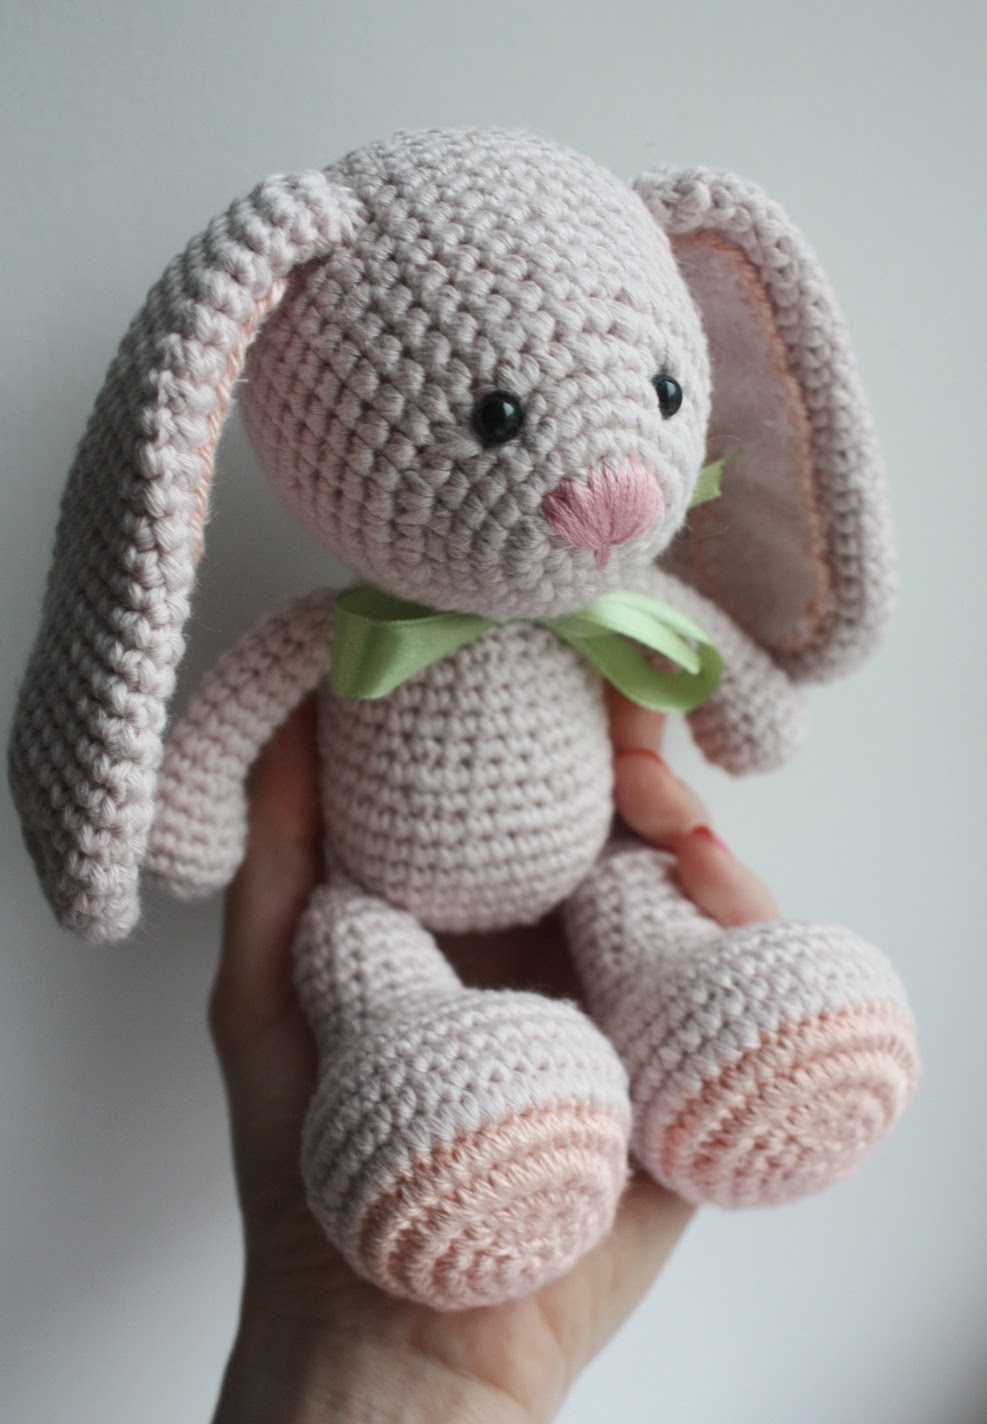 Happyamigurumi: New Design In Process: Little Amigurumi Bunny